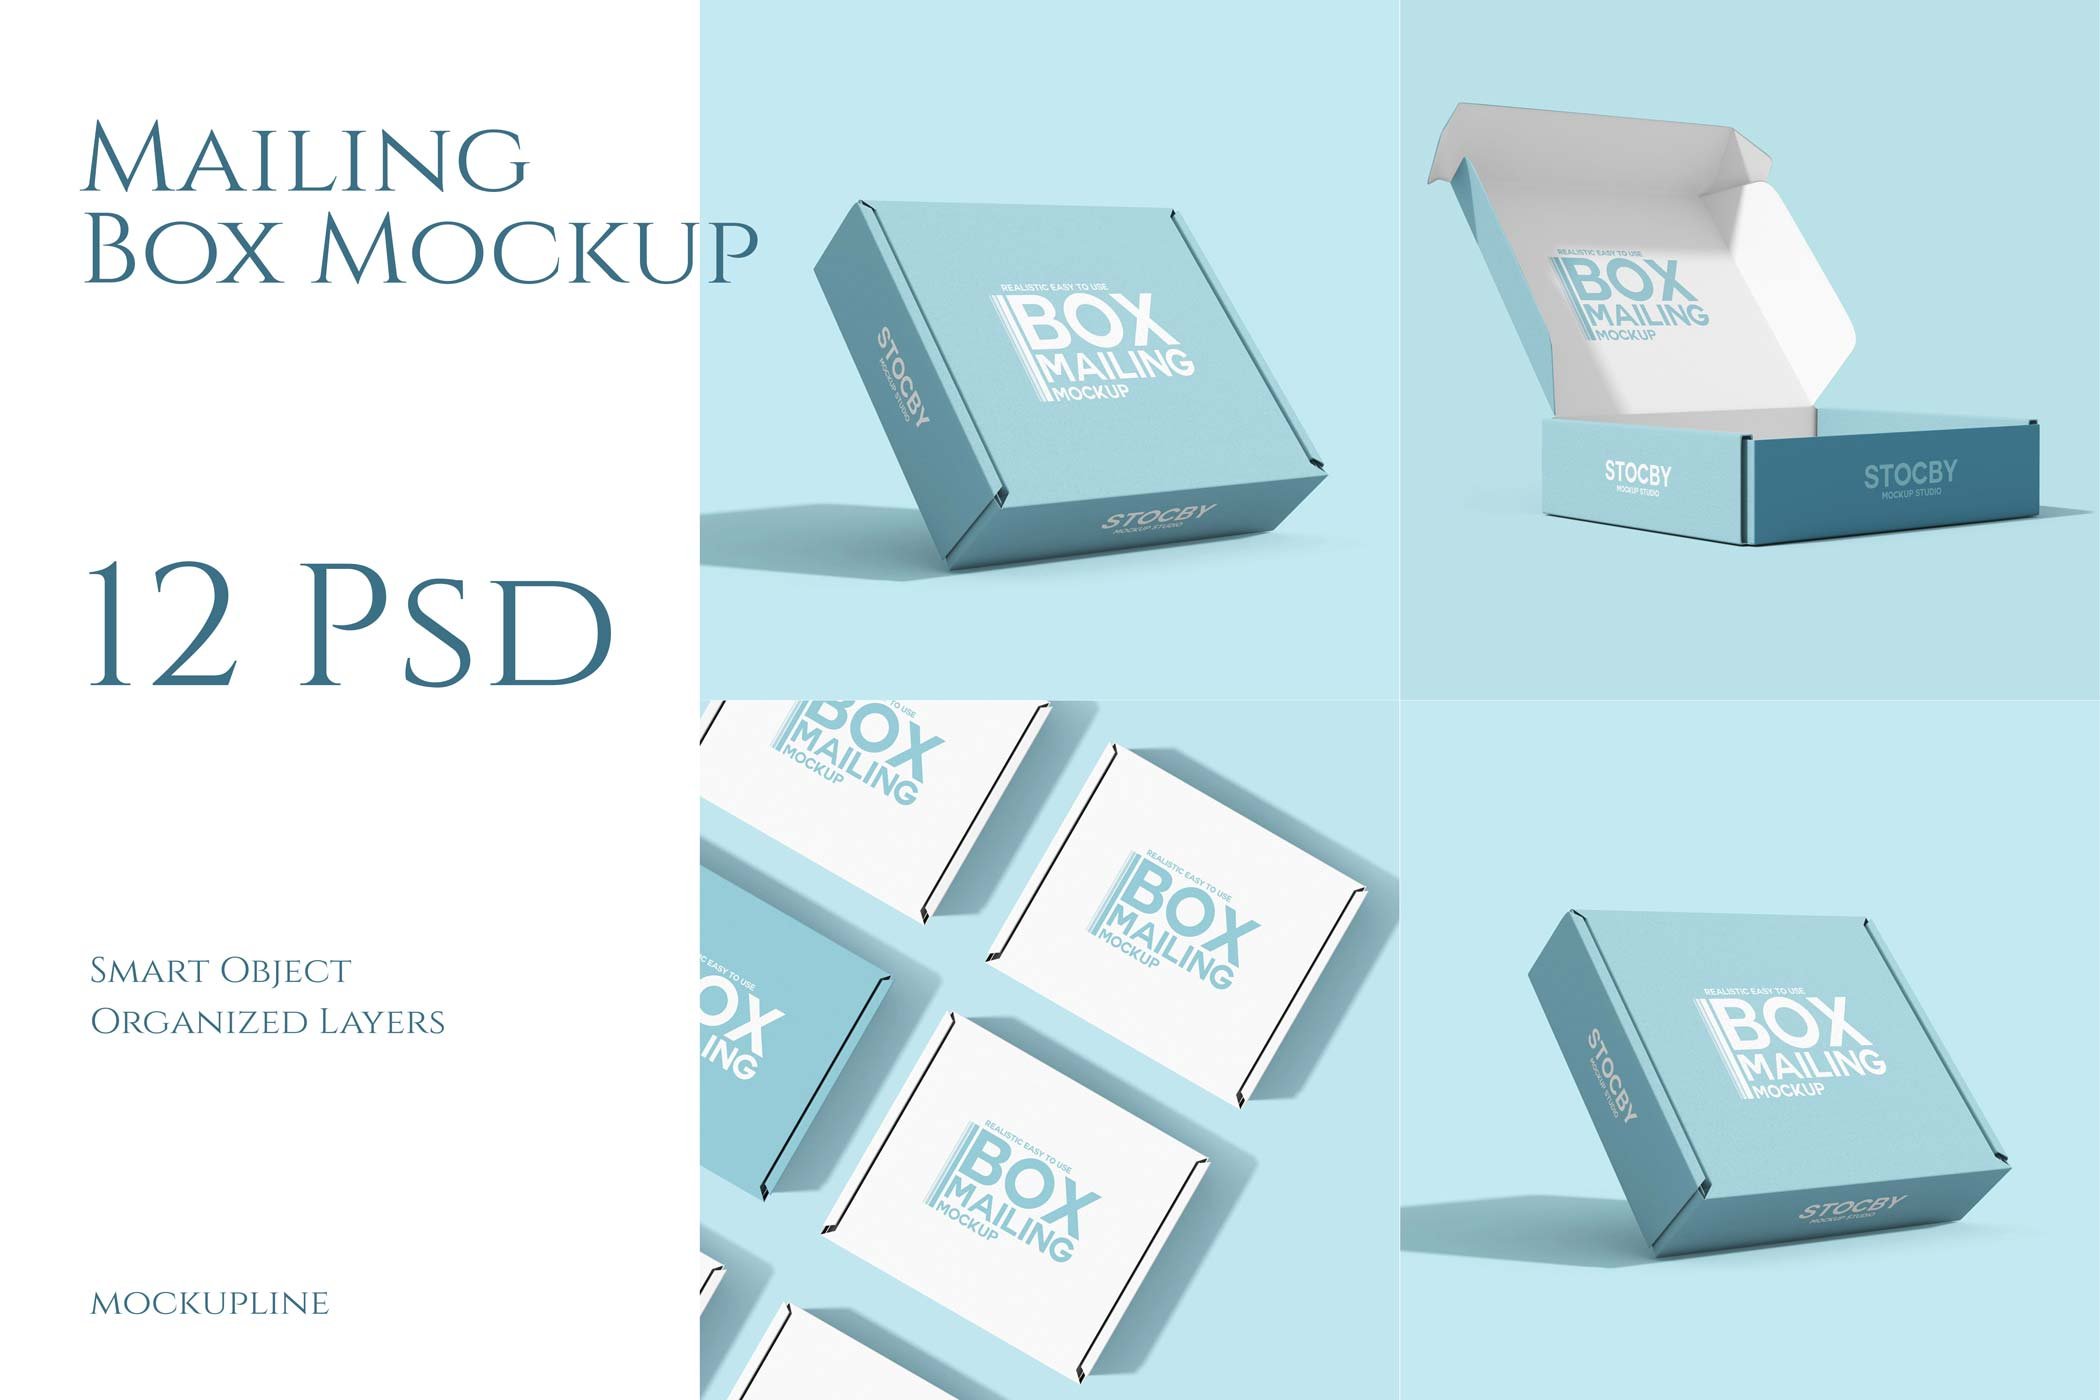 Mailing Box Mockup Set cover image.